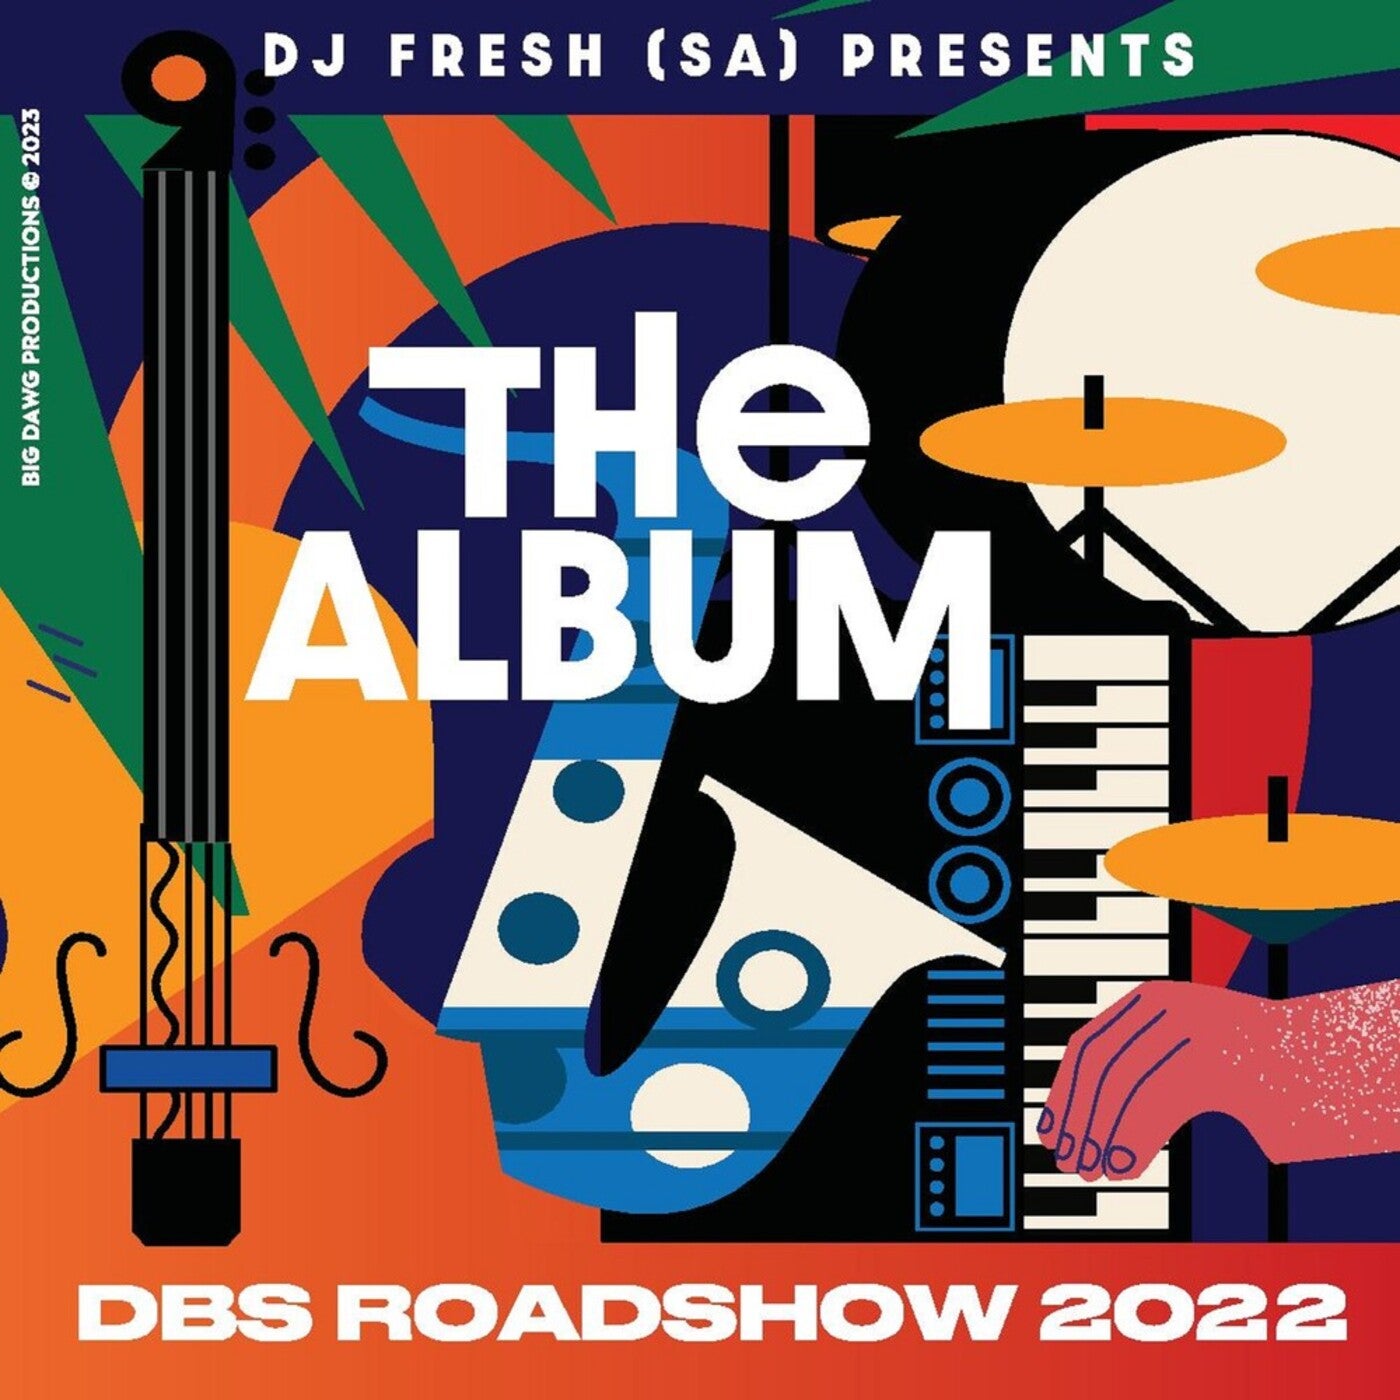 DBS Roadshow 2022